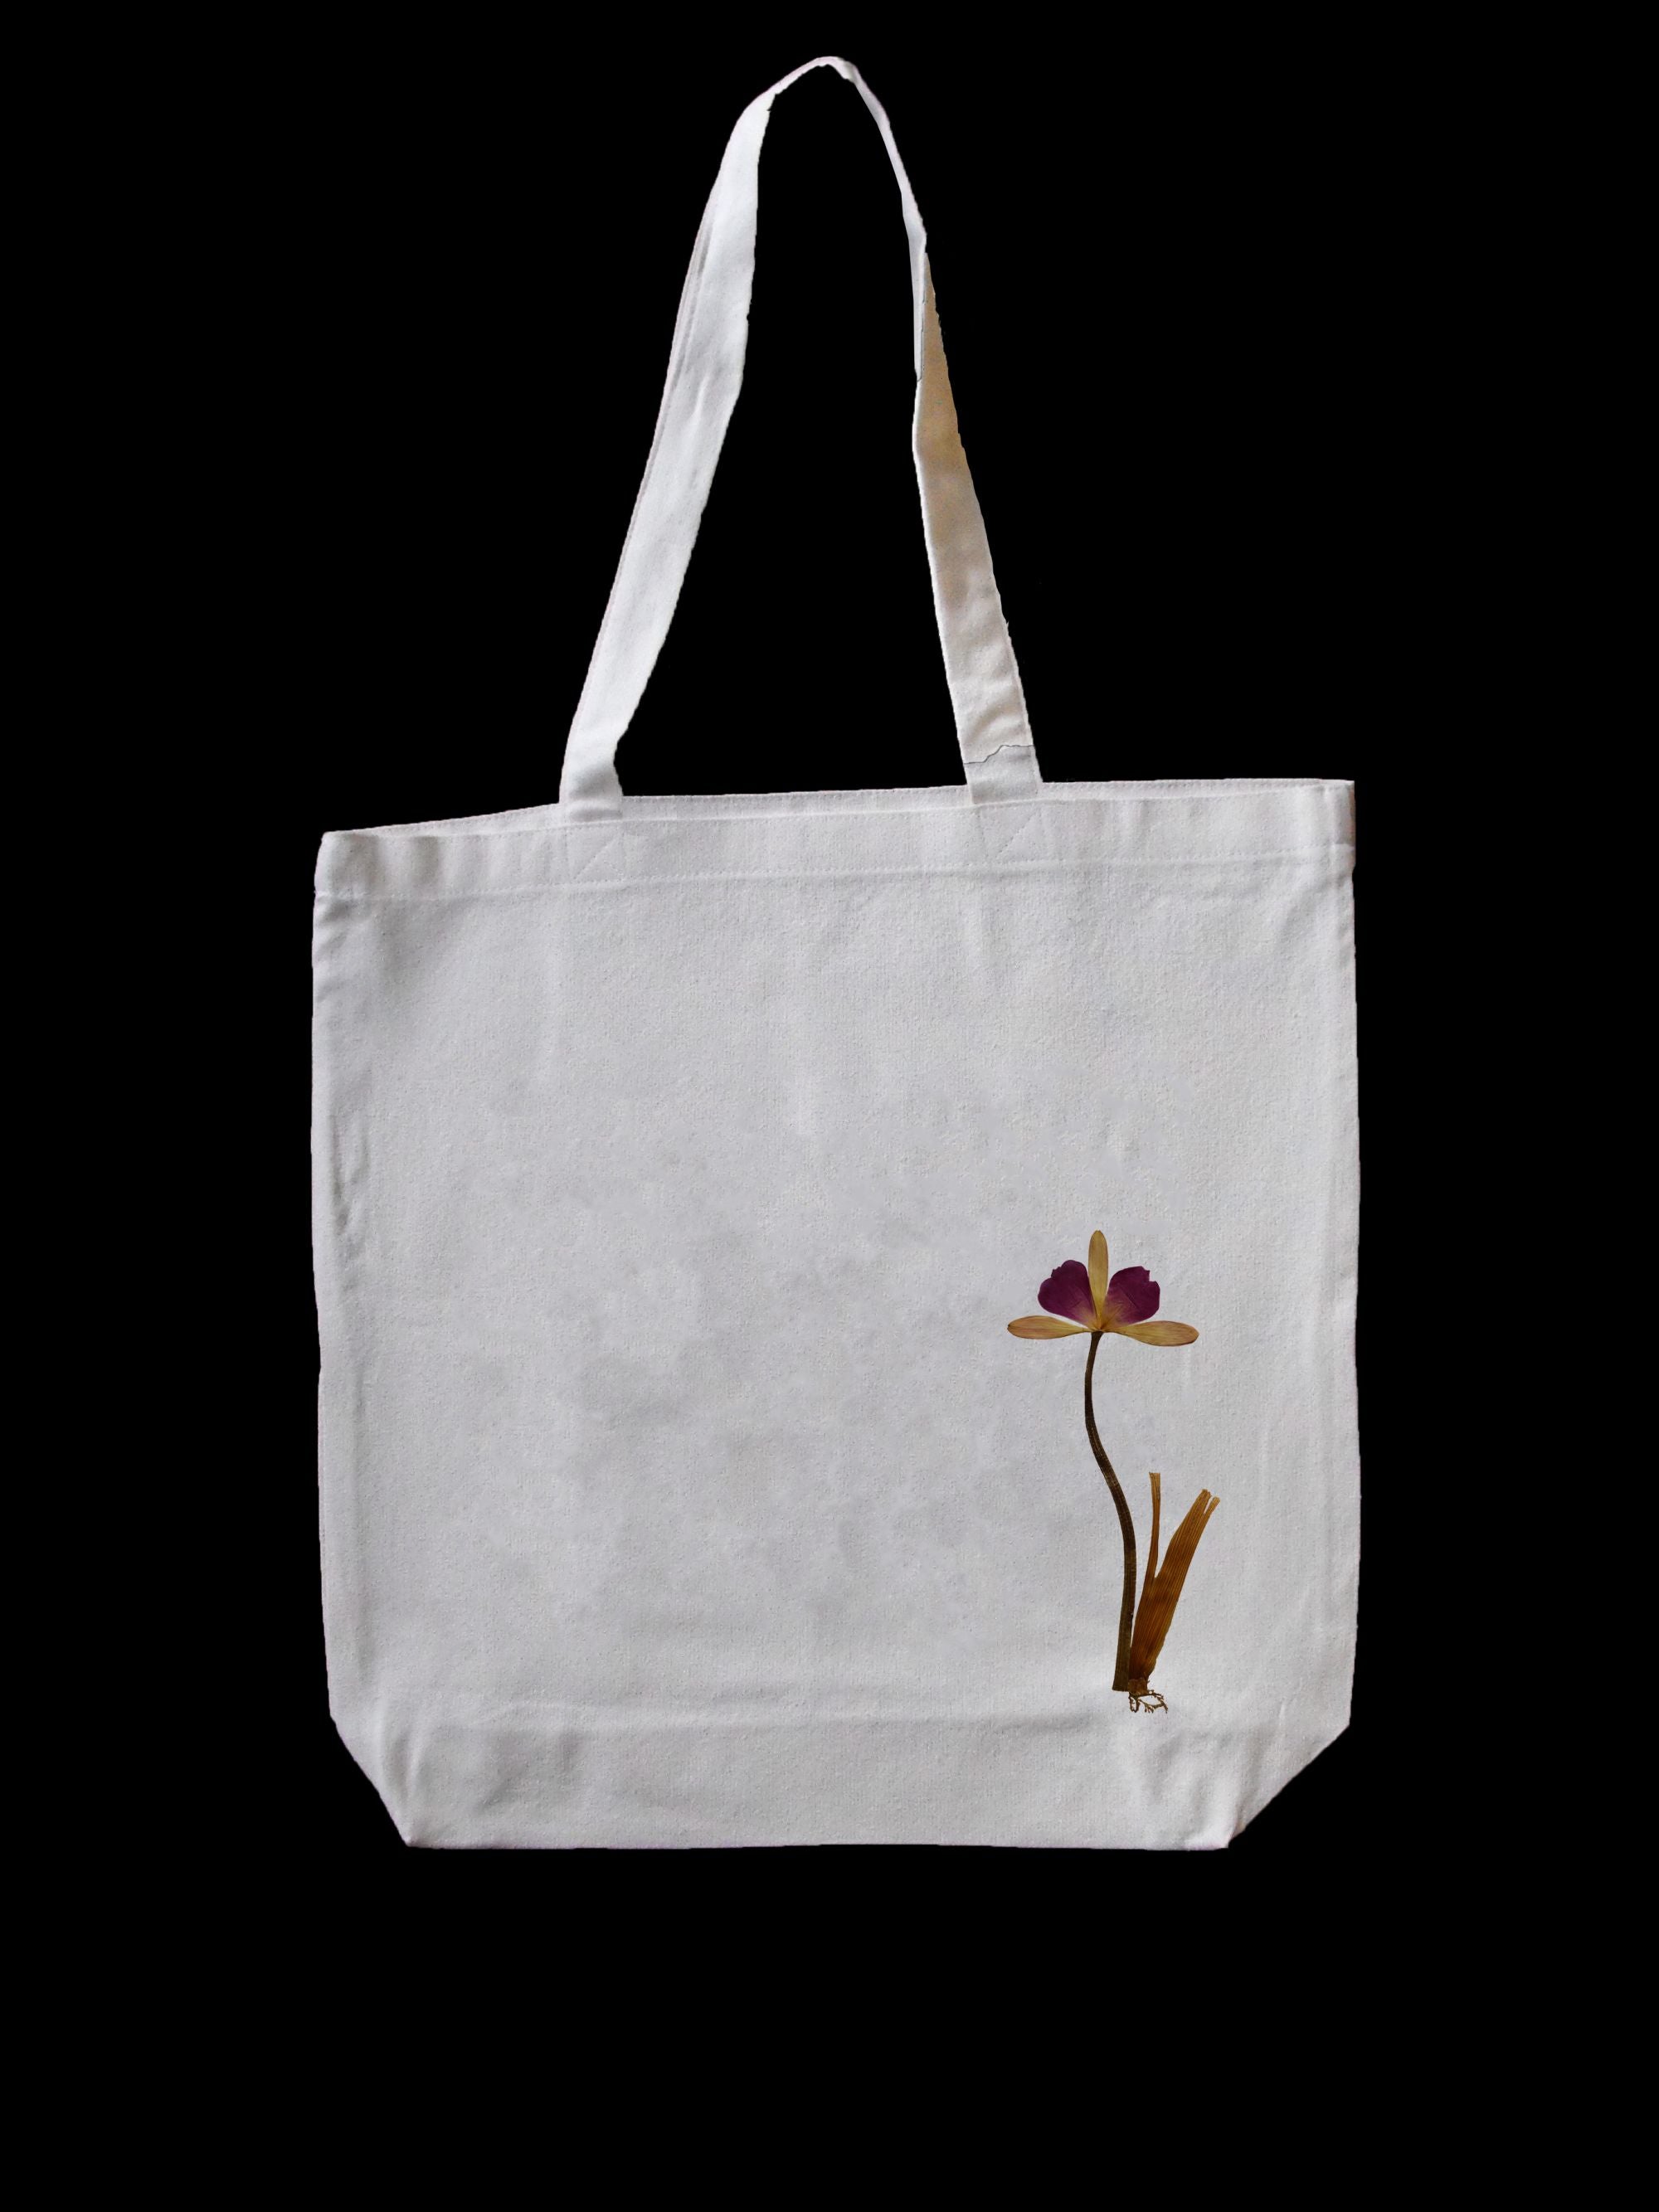 Flower Ornament White Tote Bag